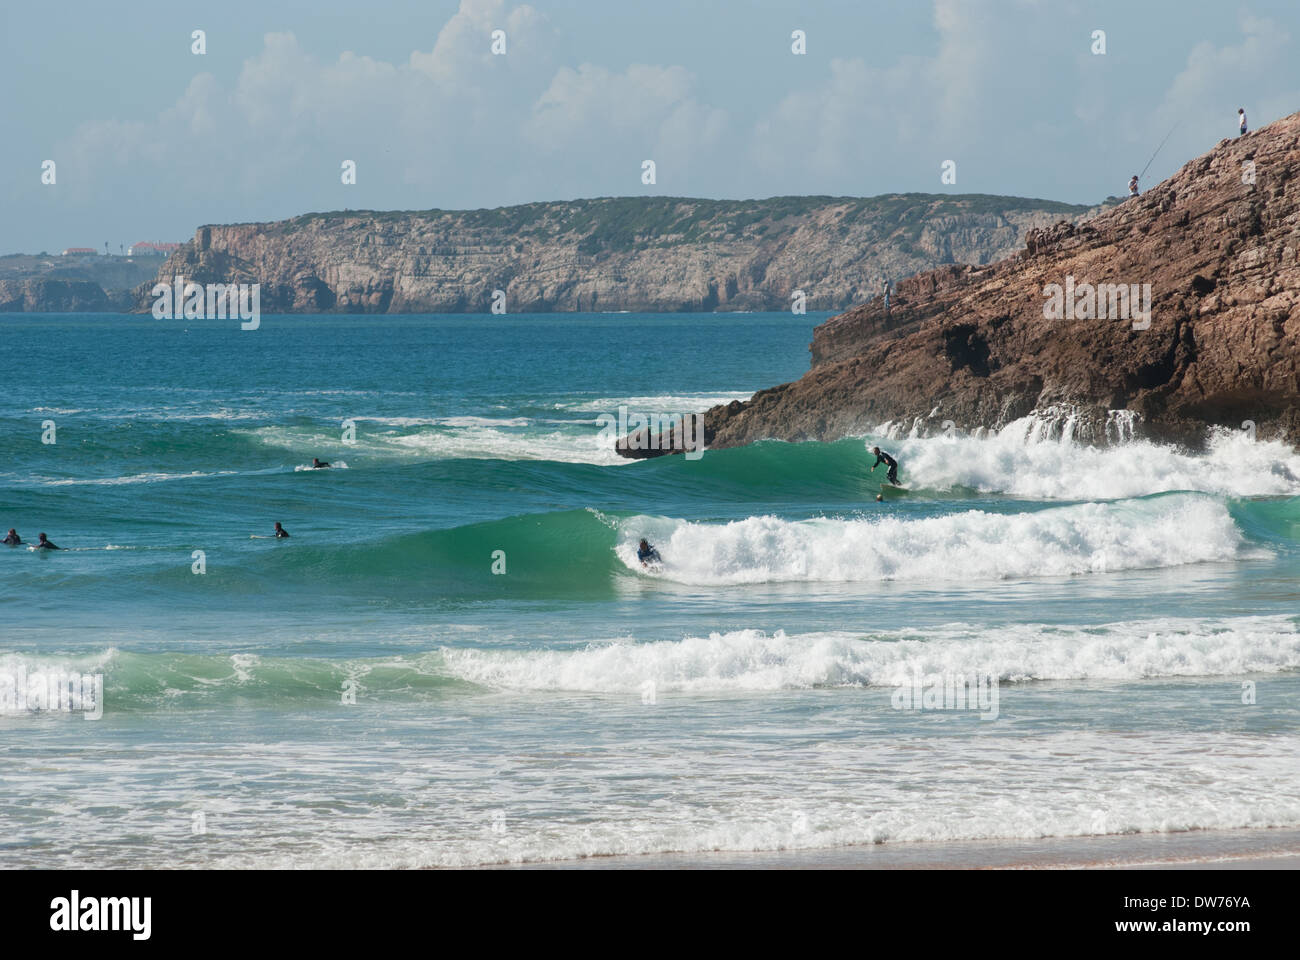 Surfers enjoy the waves at Praia do Zavial on the south coast of Portugal's Algarve region. Stock Photo